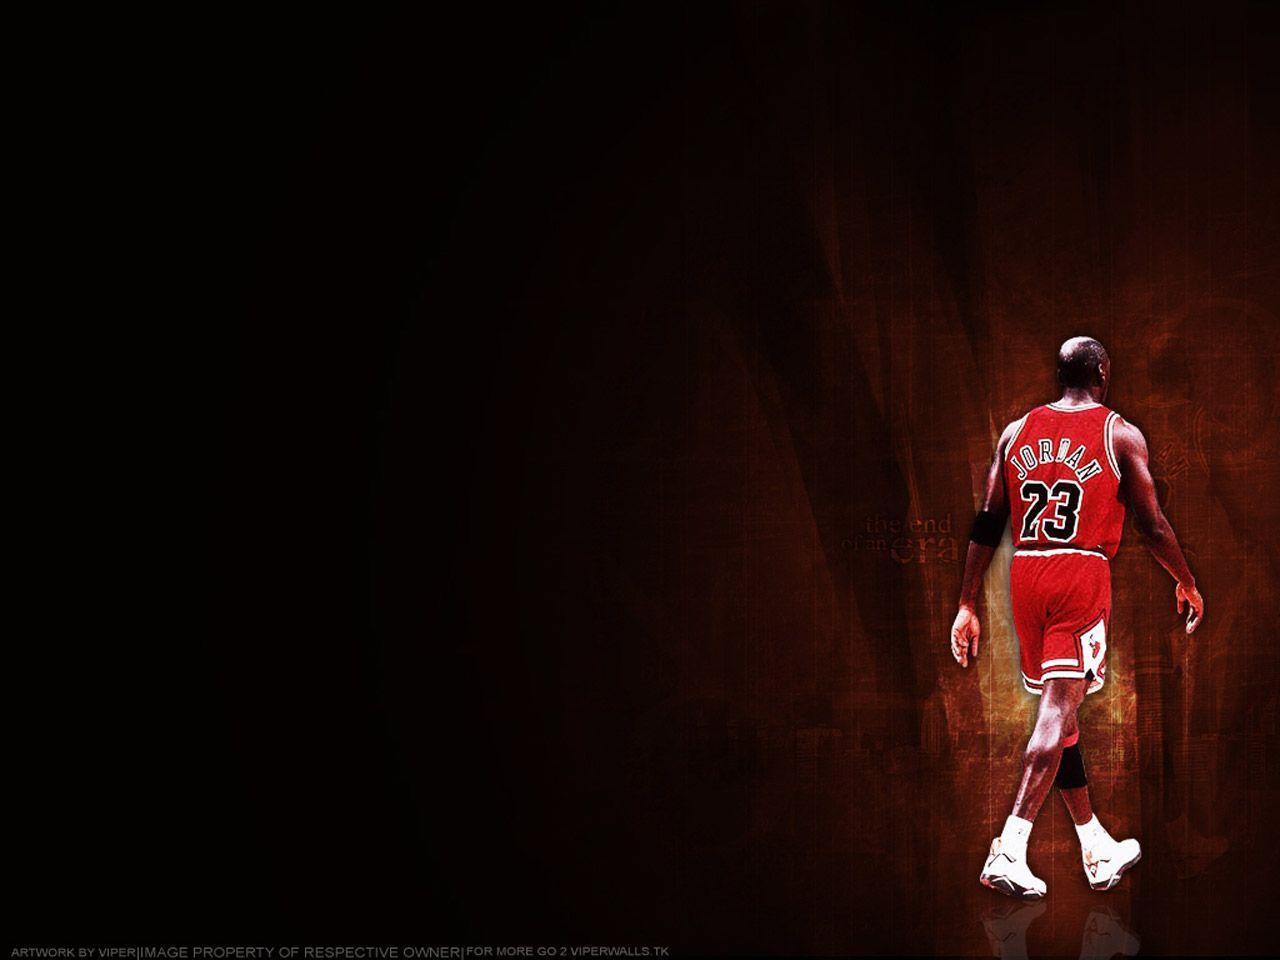 15 Of The Best Michael Jordan Wallpapers!